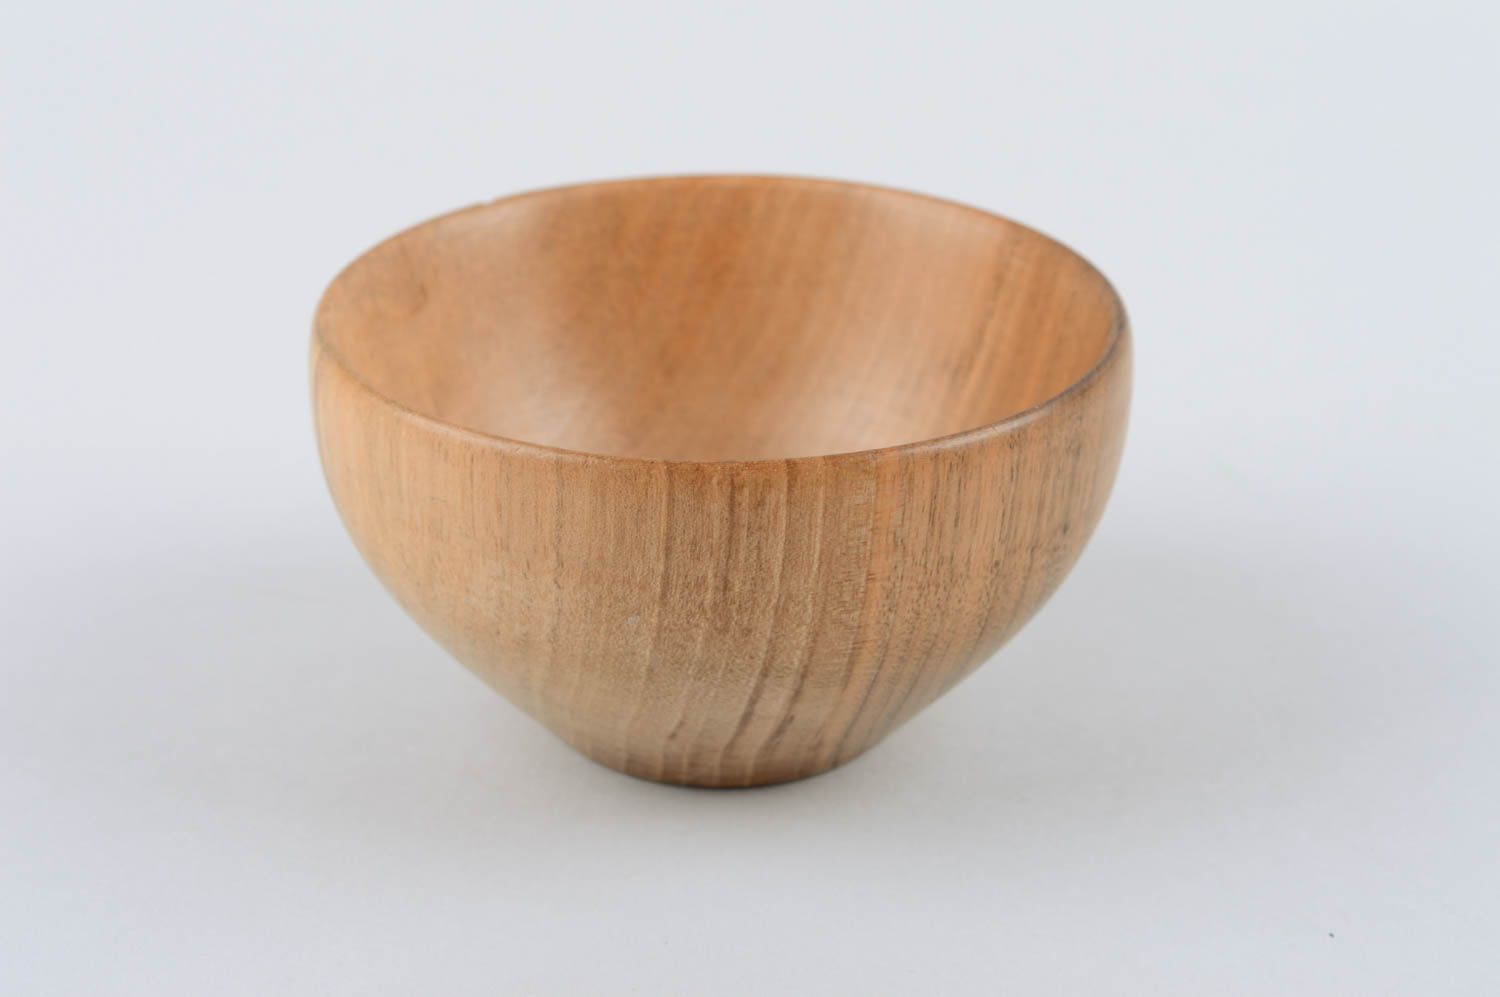 Handmade wooden bowl wooden utensils wooden bowls and plates kitchen decor photo 2